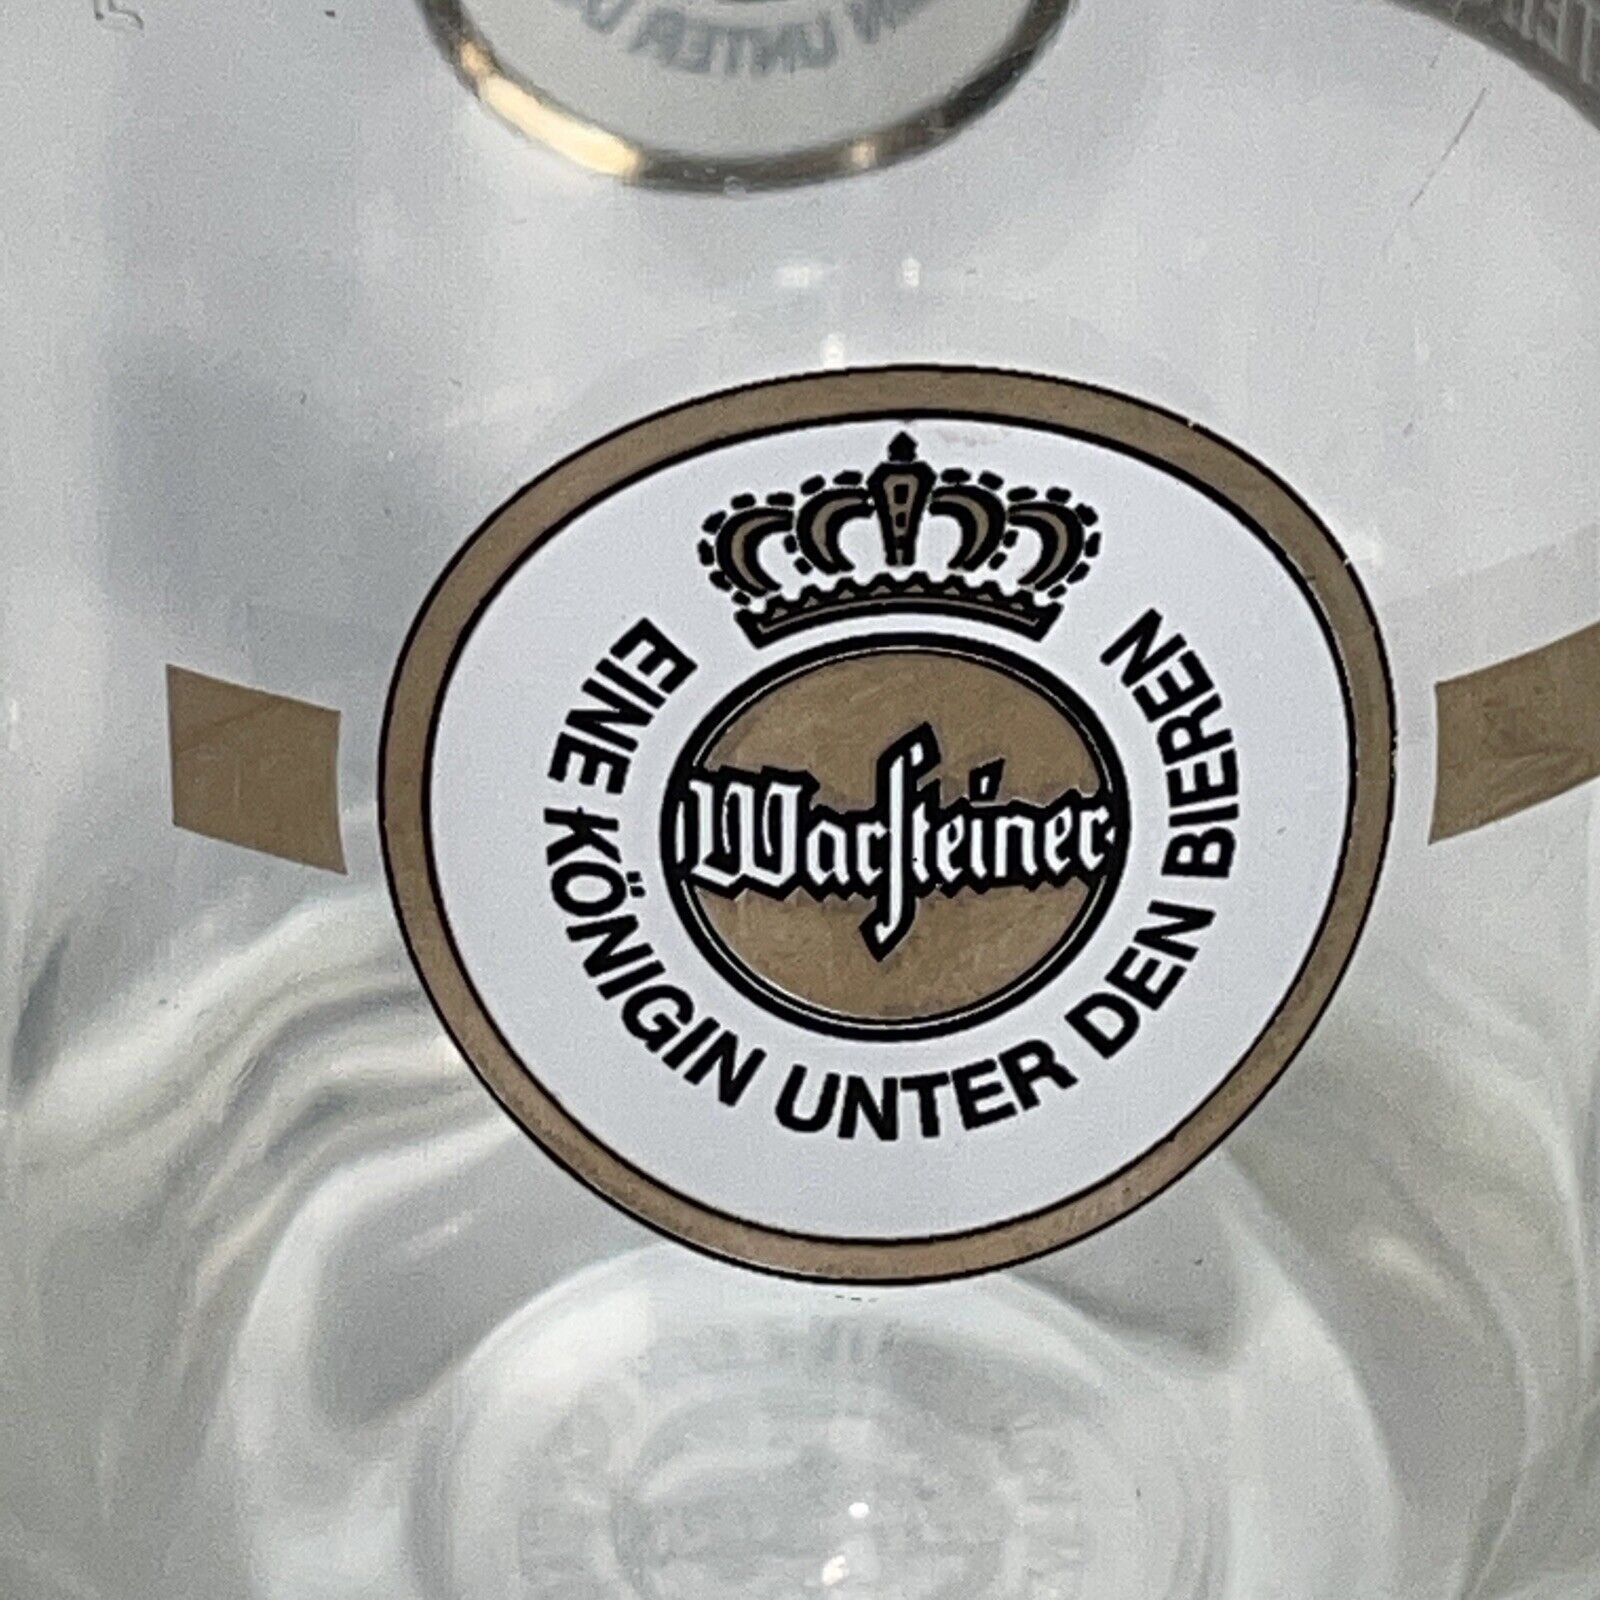 Warsteiner German Beer Glass Stein Mug 0.5 Liter Queen of Beers With Good Friend